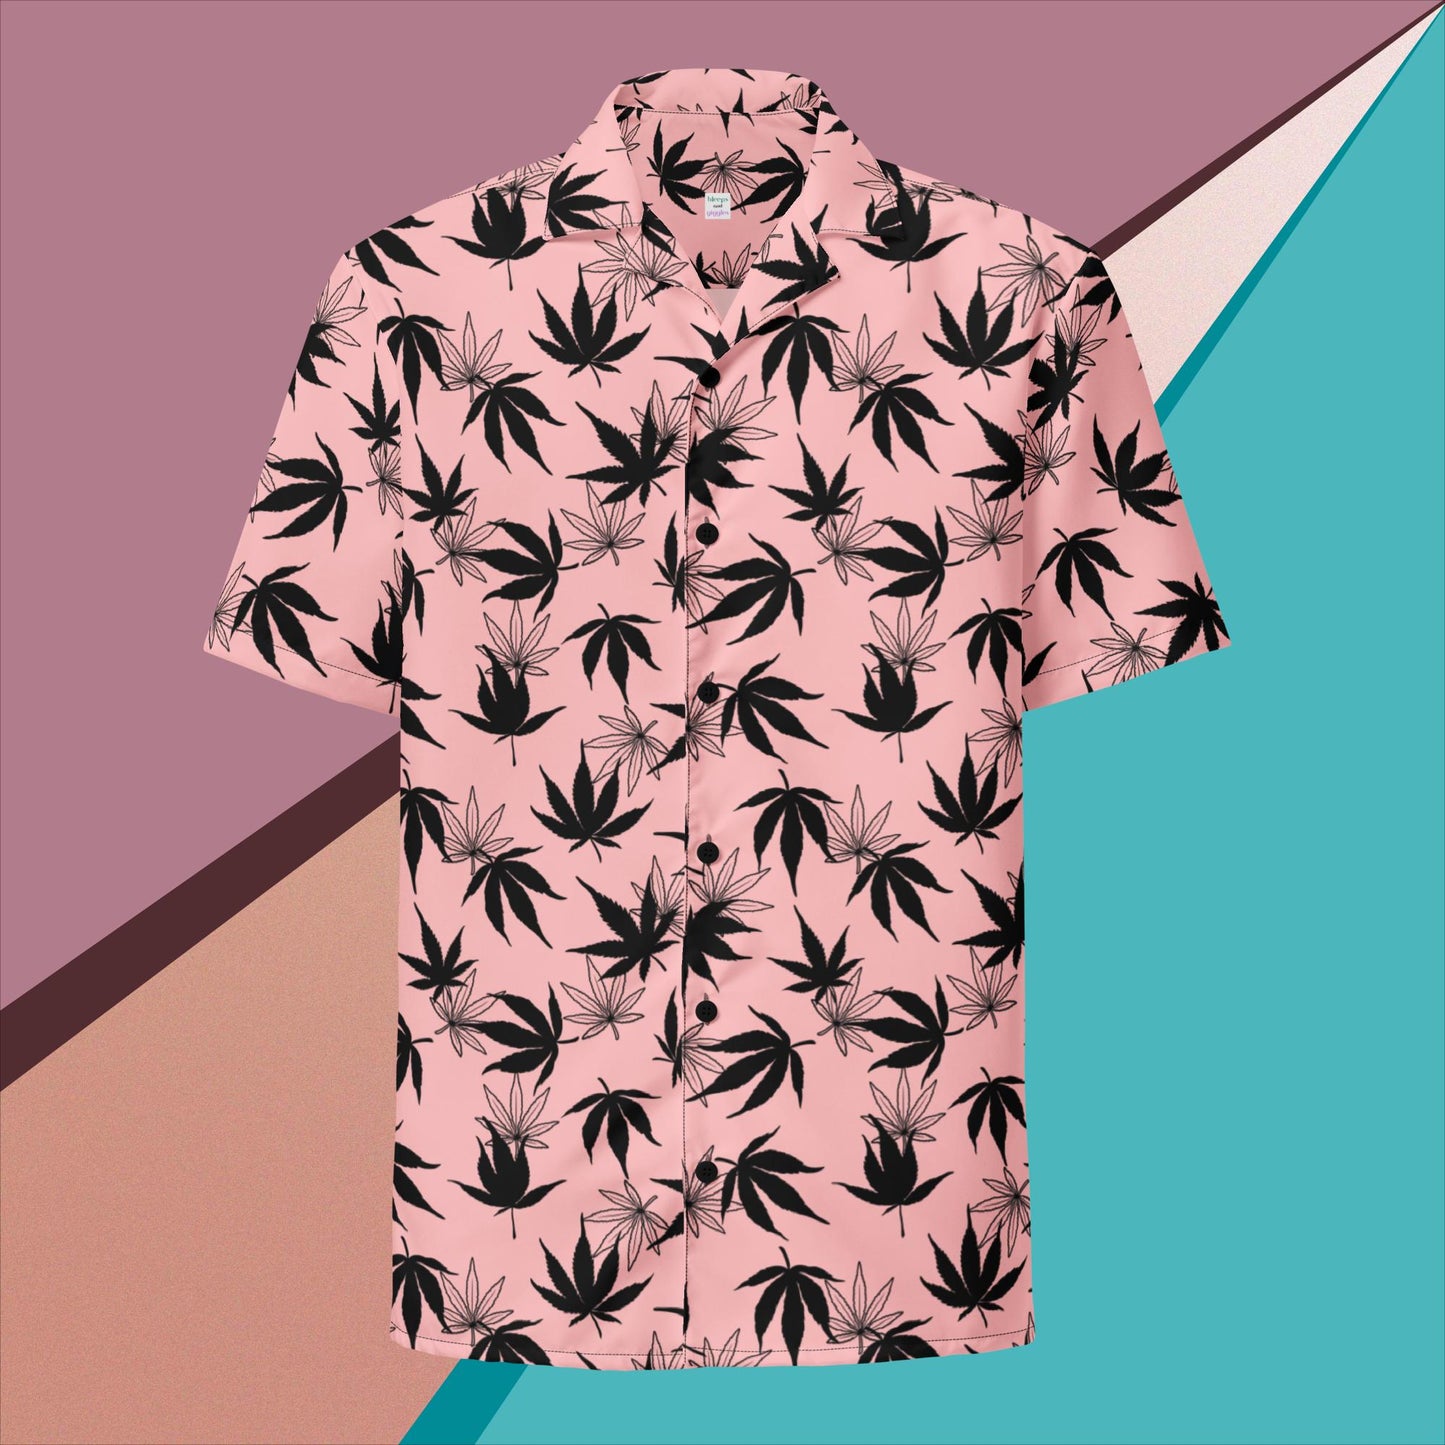 The PinkBlack Unisex button shirt